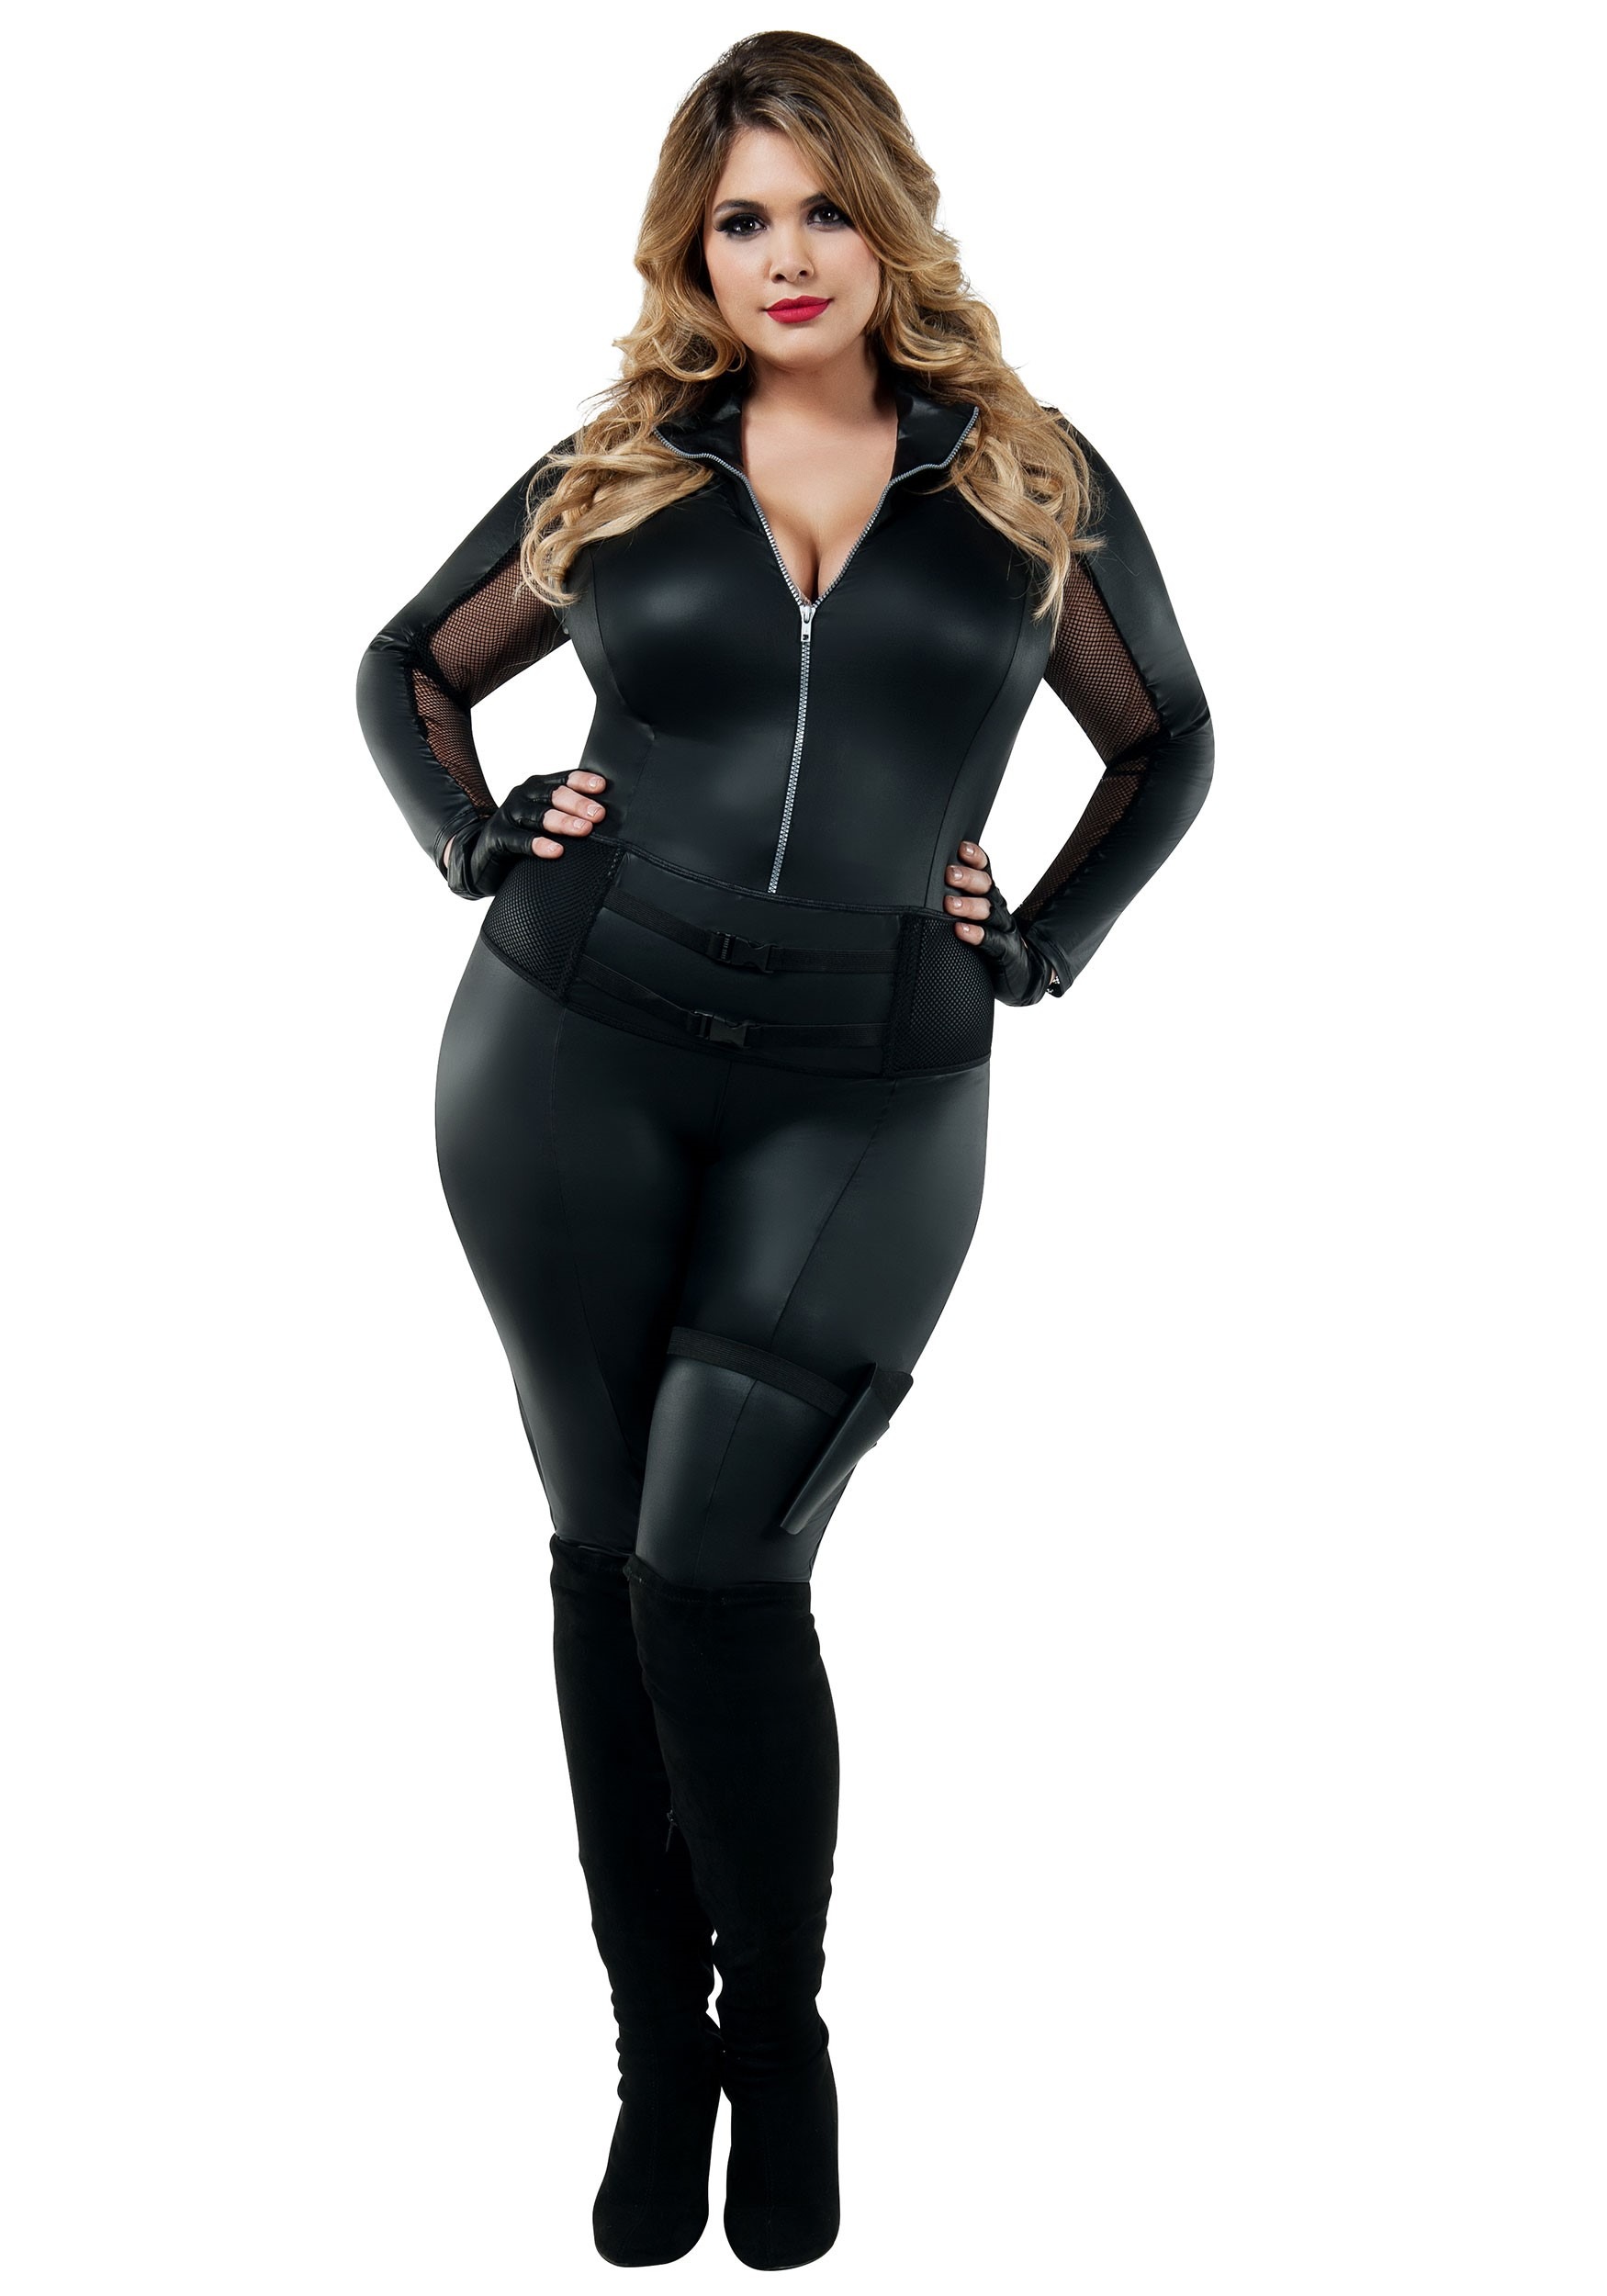 Secret Agent Women's Plus Size Costume Spy Jumpsuit from Fun.com Fando...